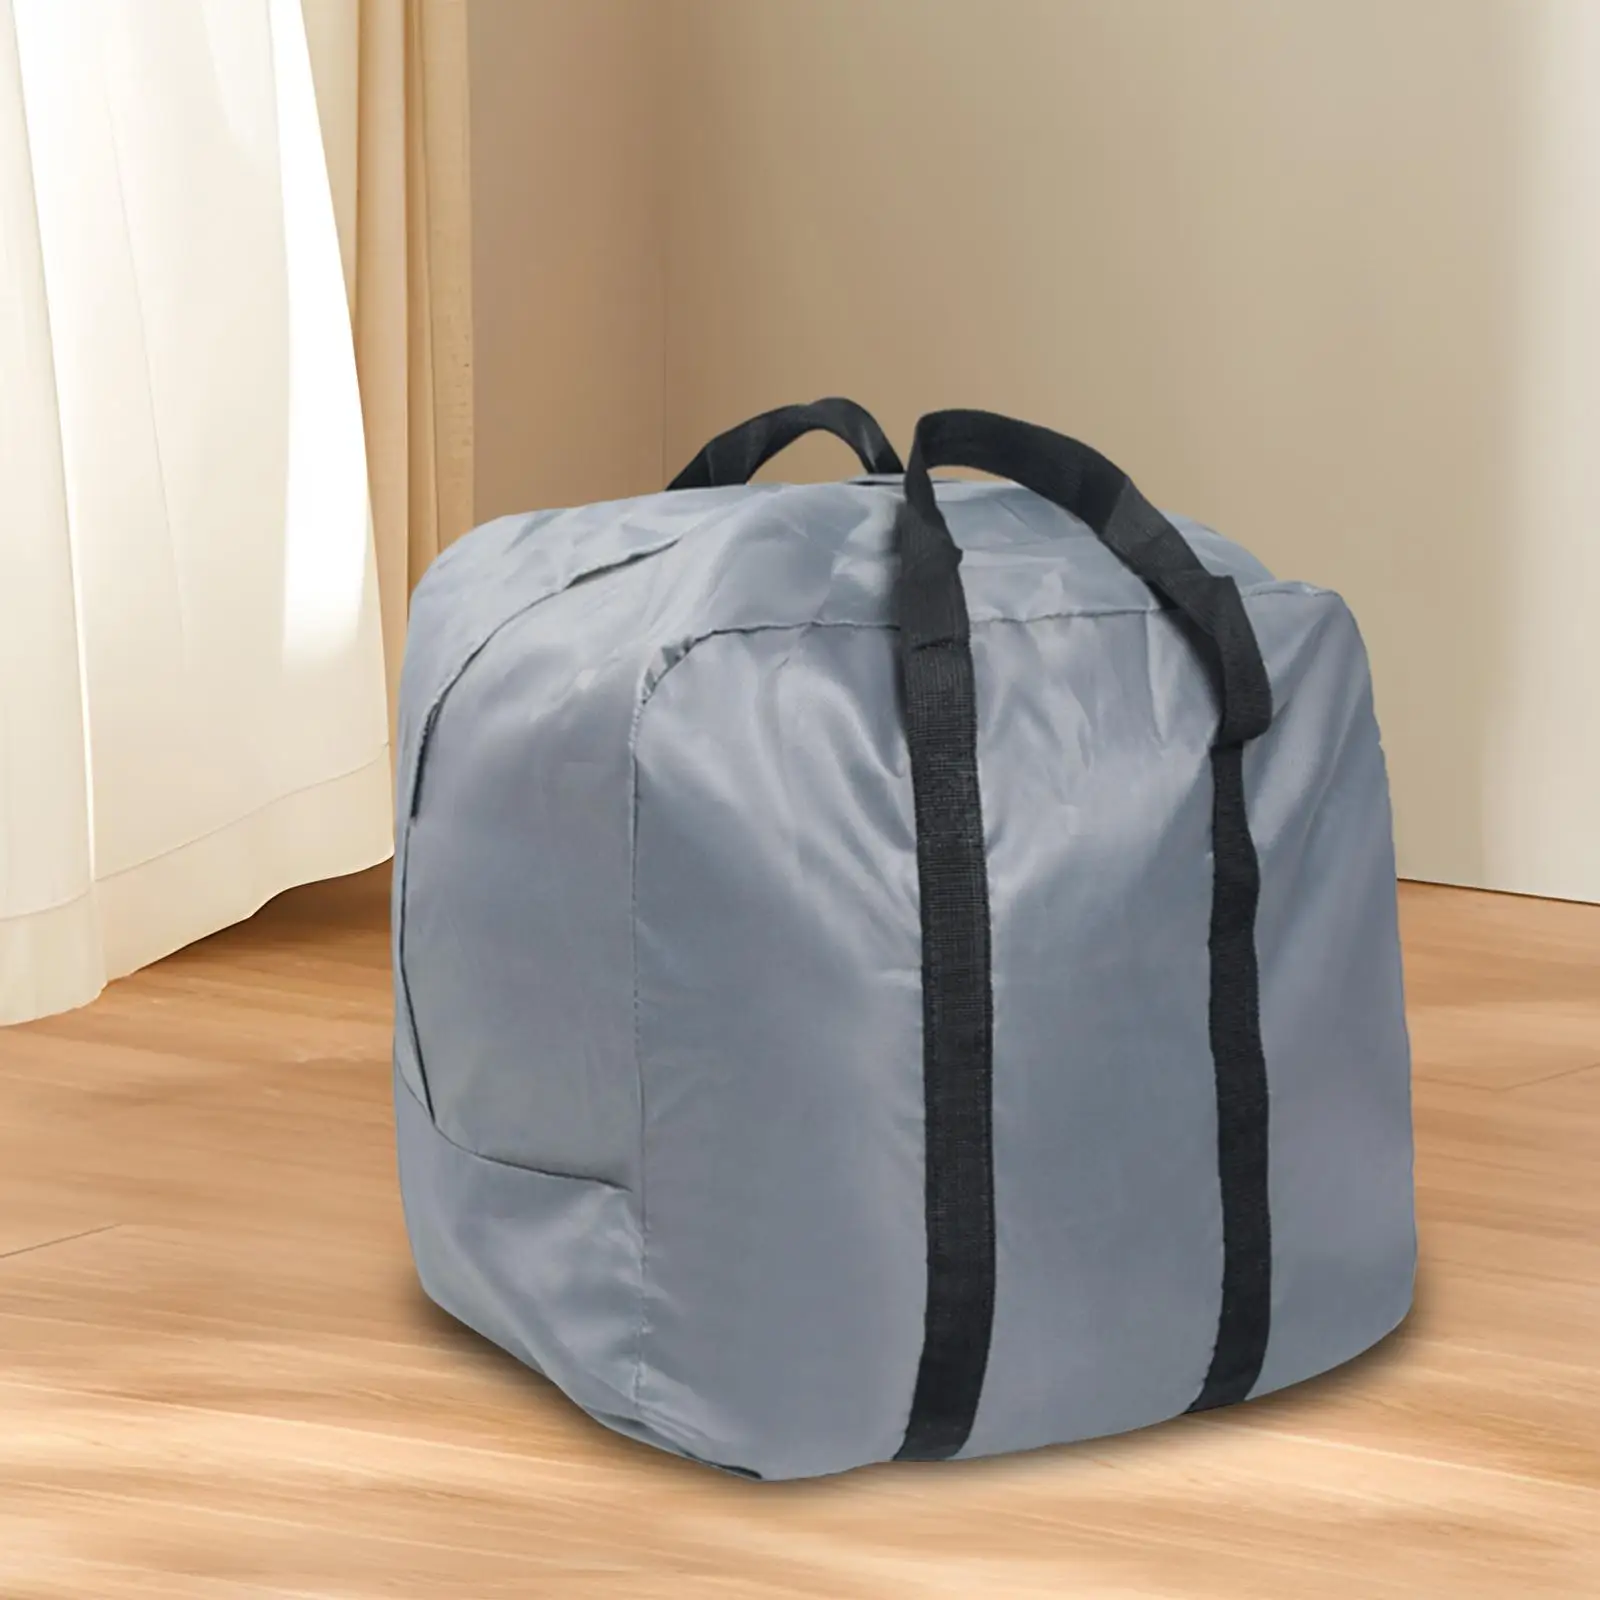 Quilt Storage Bag Blanket Clothes Organization Foldable Blanket Storage Bag for Bed Sheets Bedding Pillows Clothing Socks